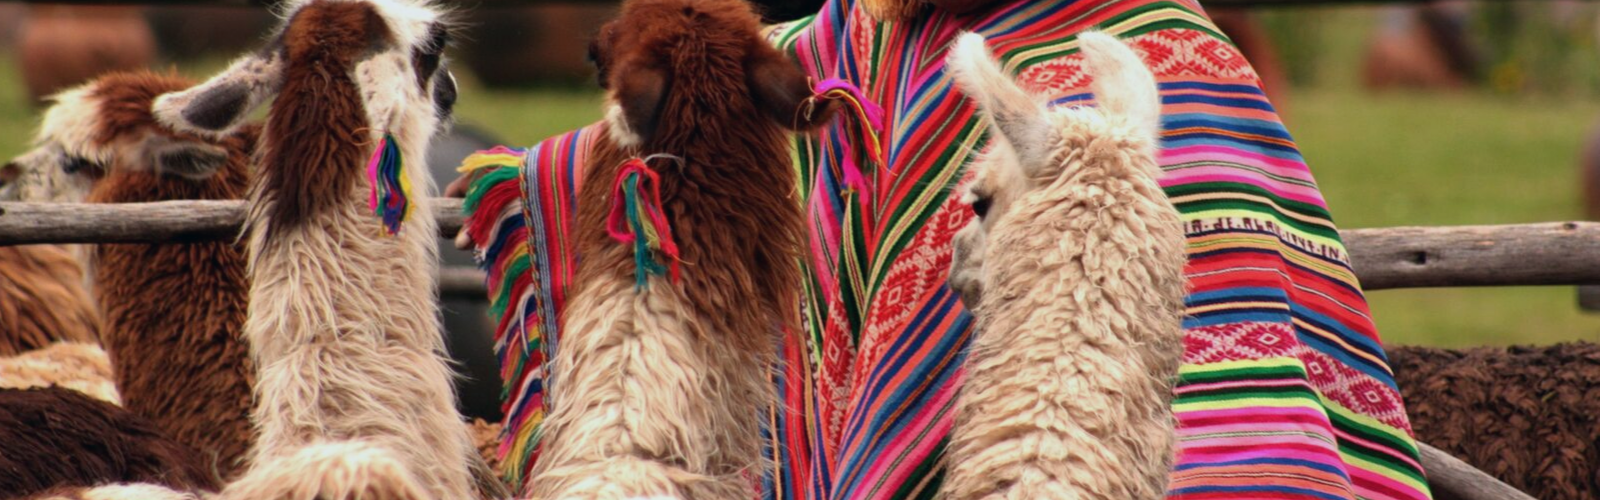 Peru: Llama & Animal Service Adventure